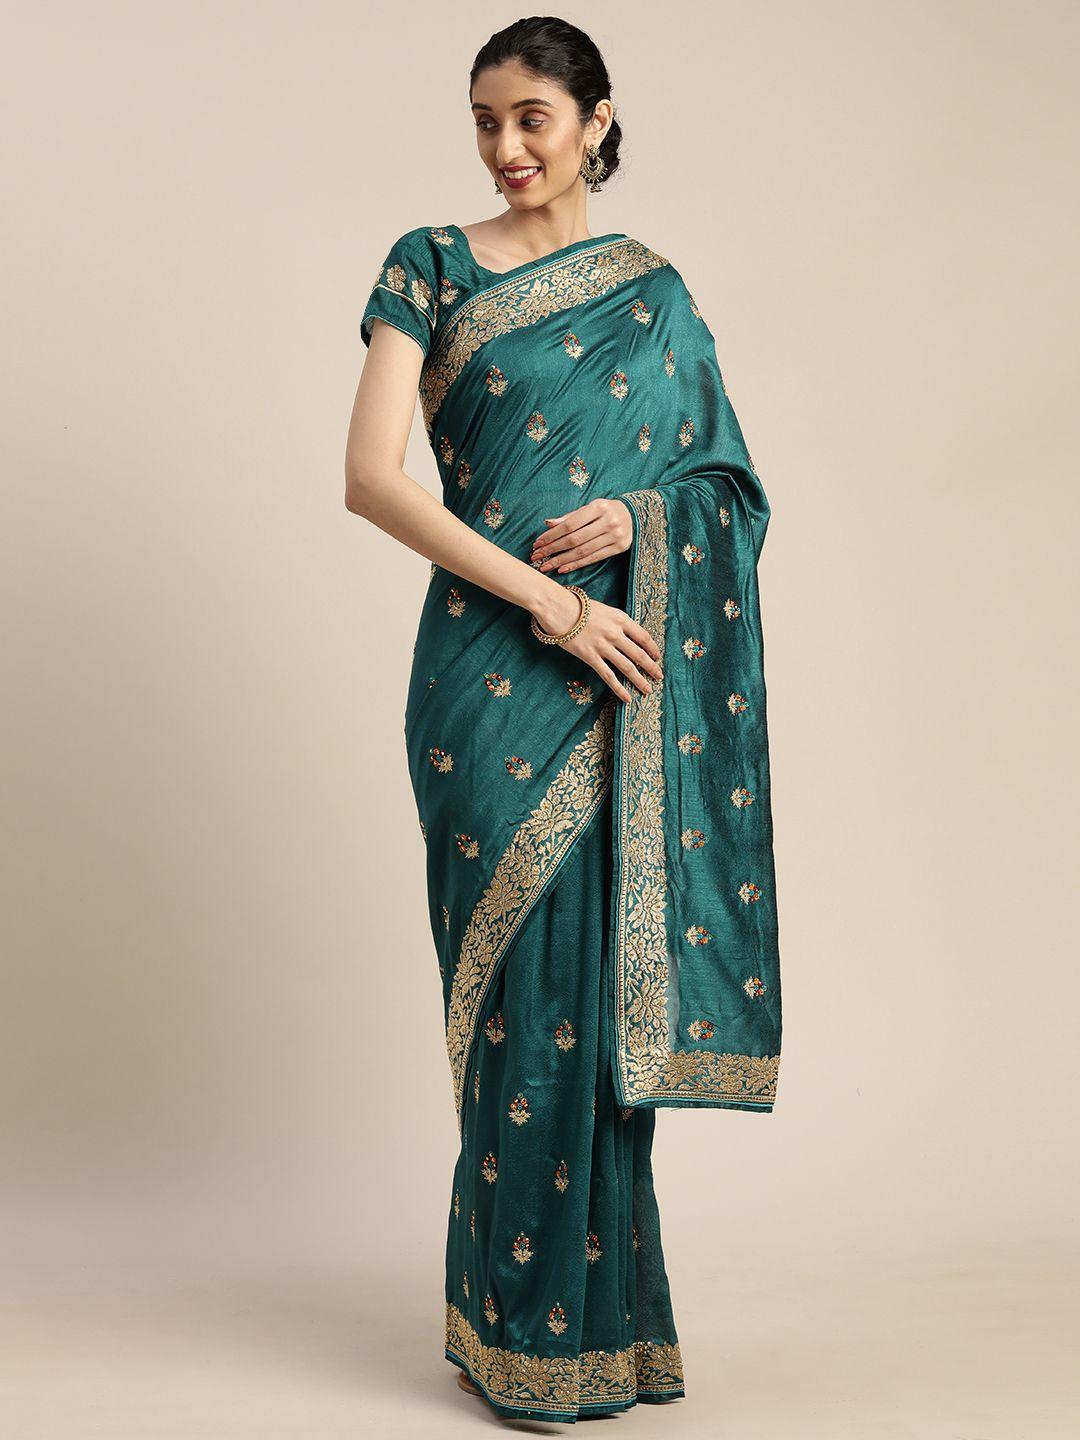 om shantam sarees turquoise blue & gold-toned poly crepe embroidered saree